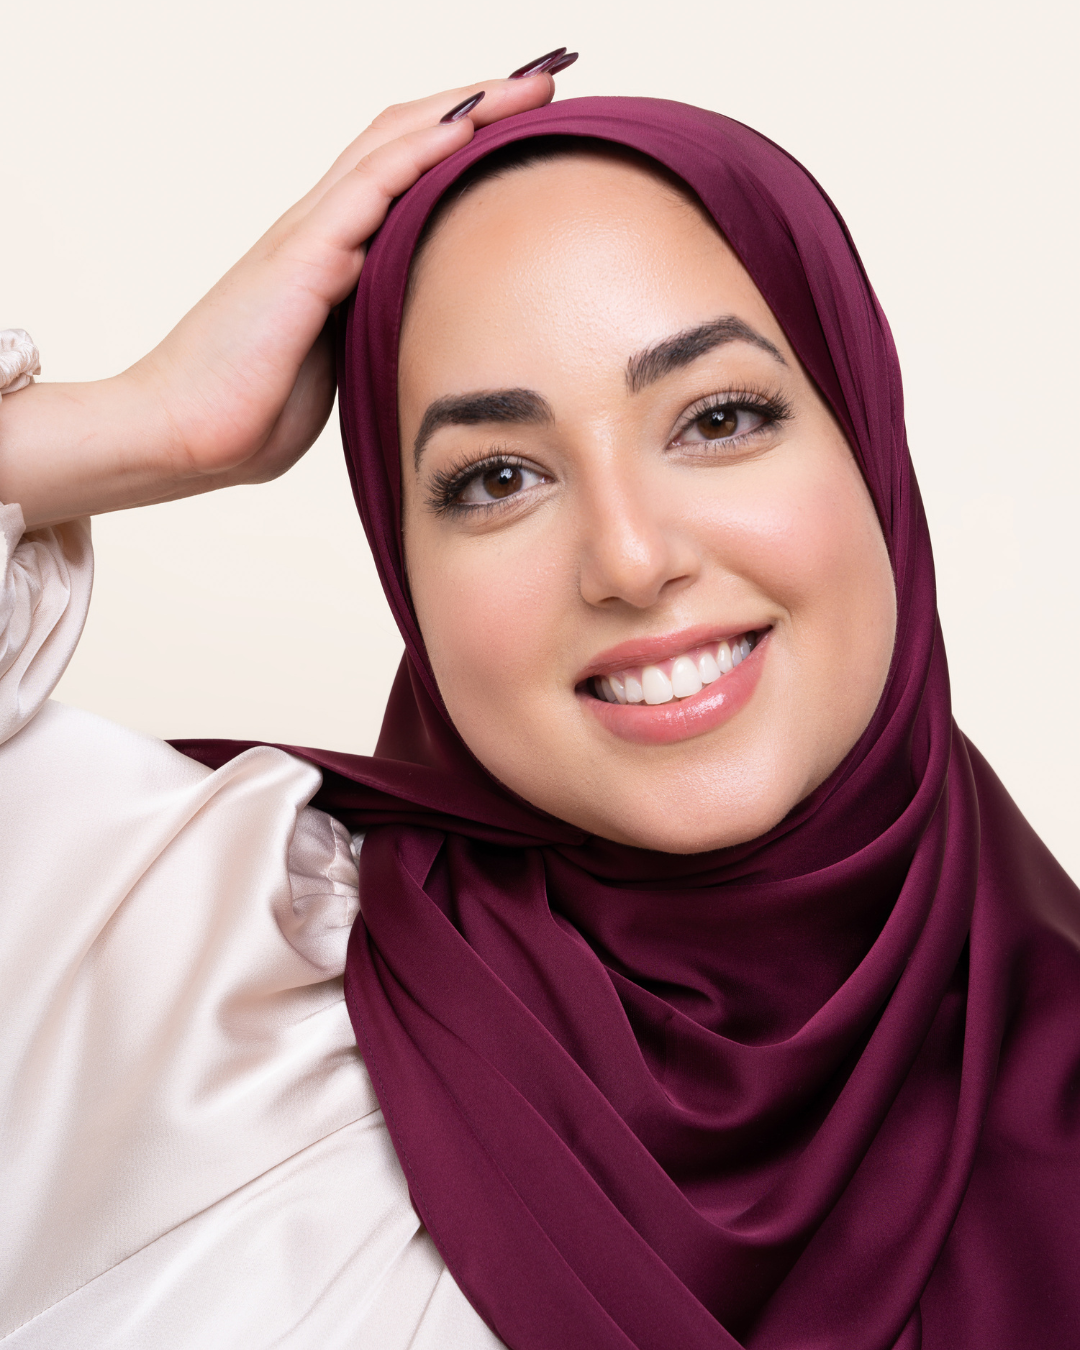 Soft Modal Hijab - Morning Calm